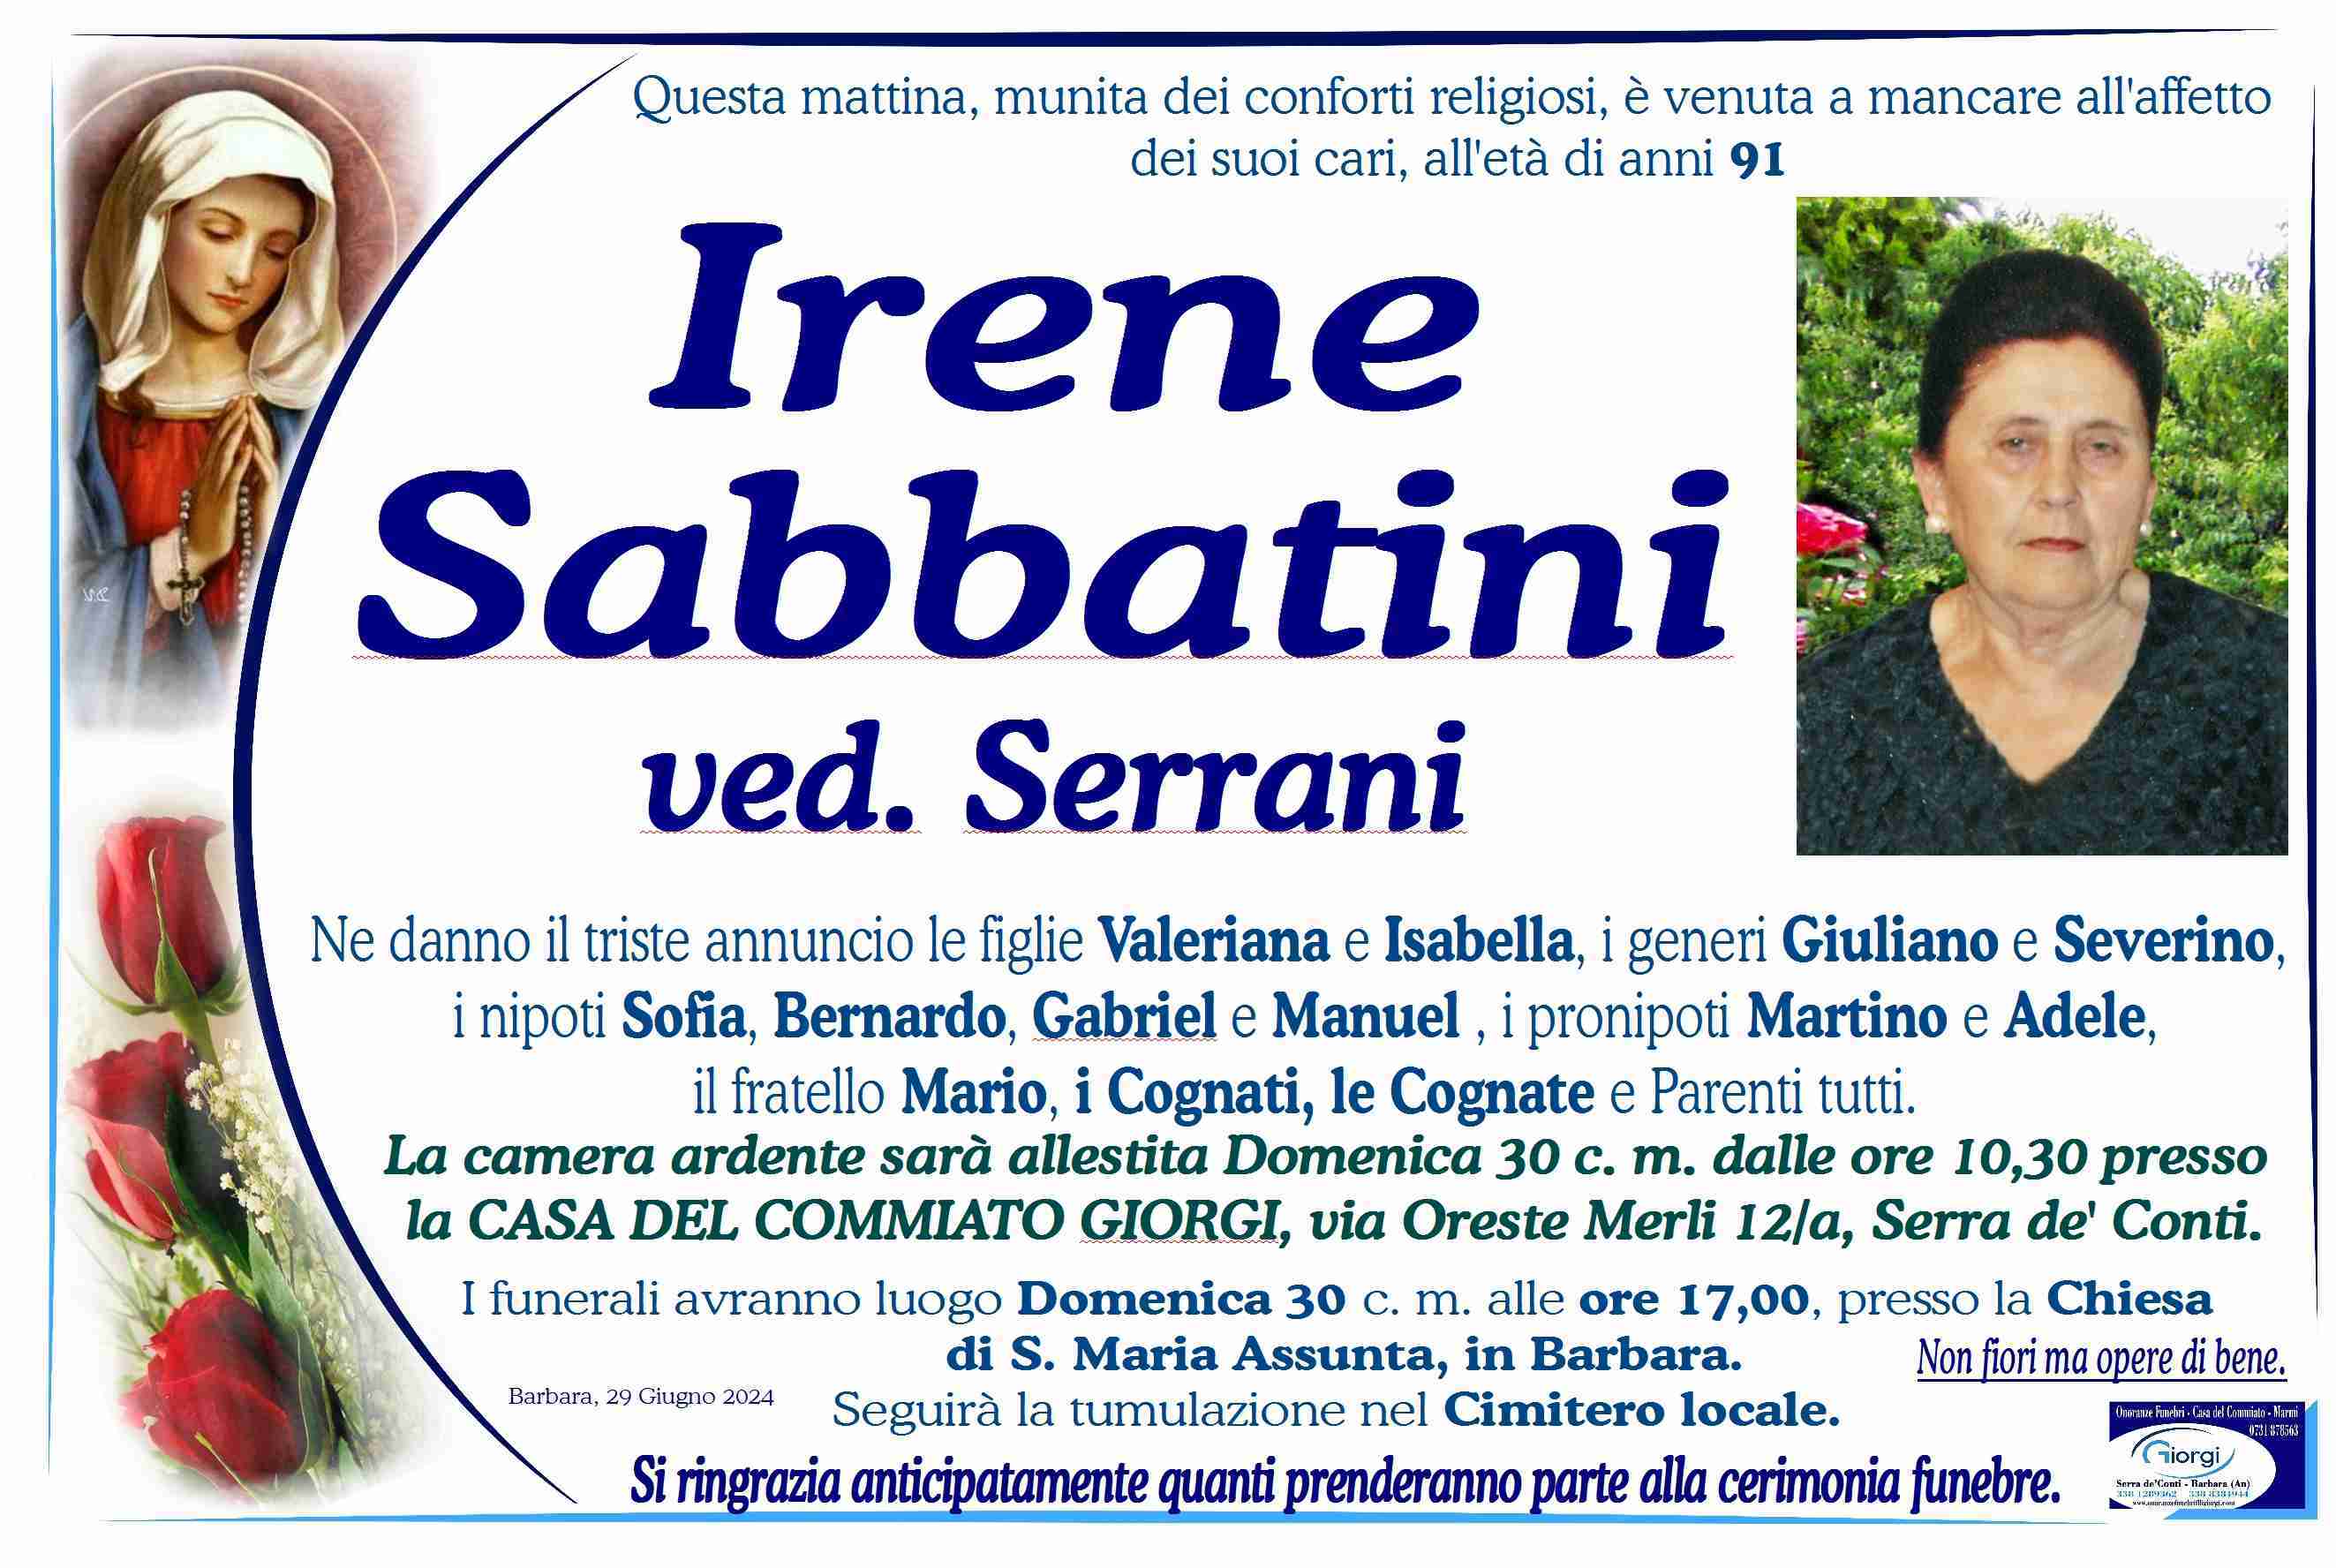 Irene Sabbatini